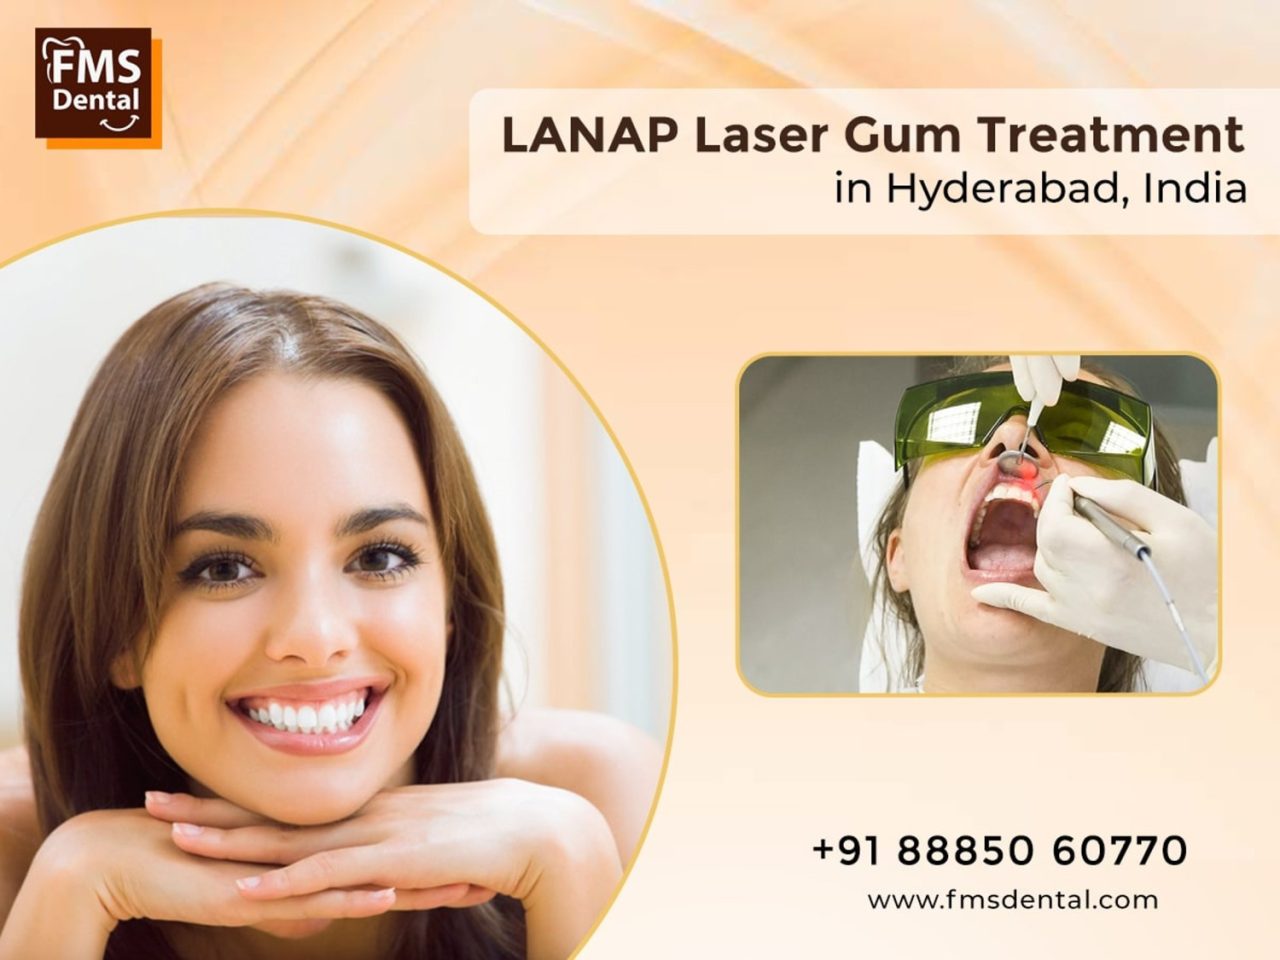 LANAP Laser Gum Treatment jpg-min (1) (1)